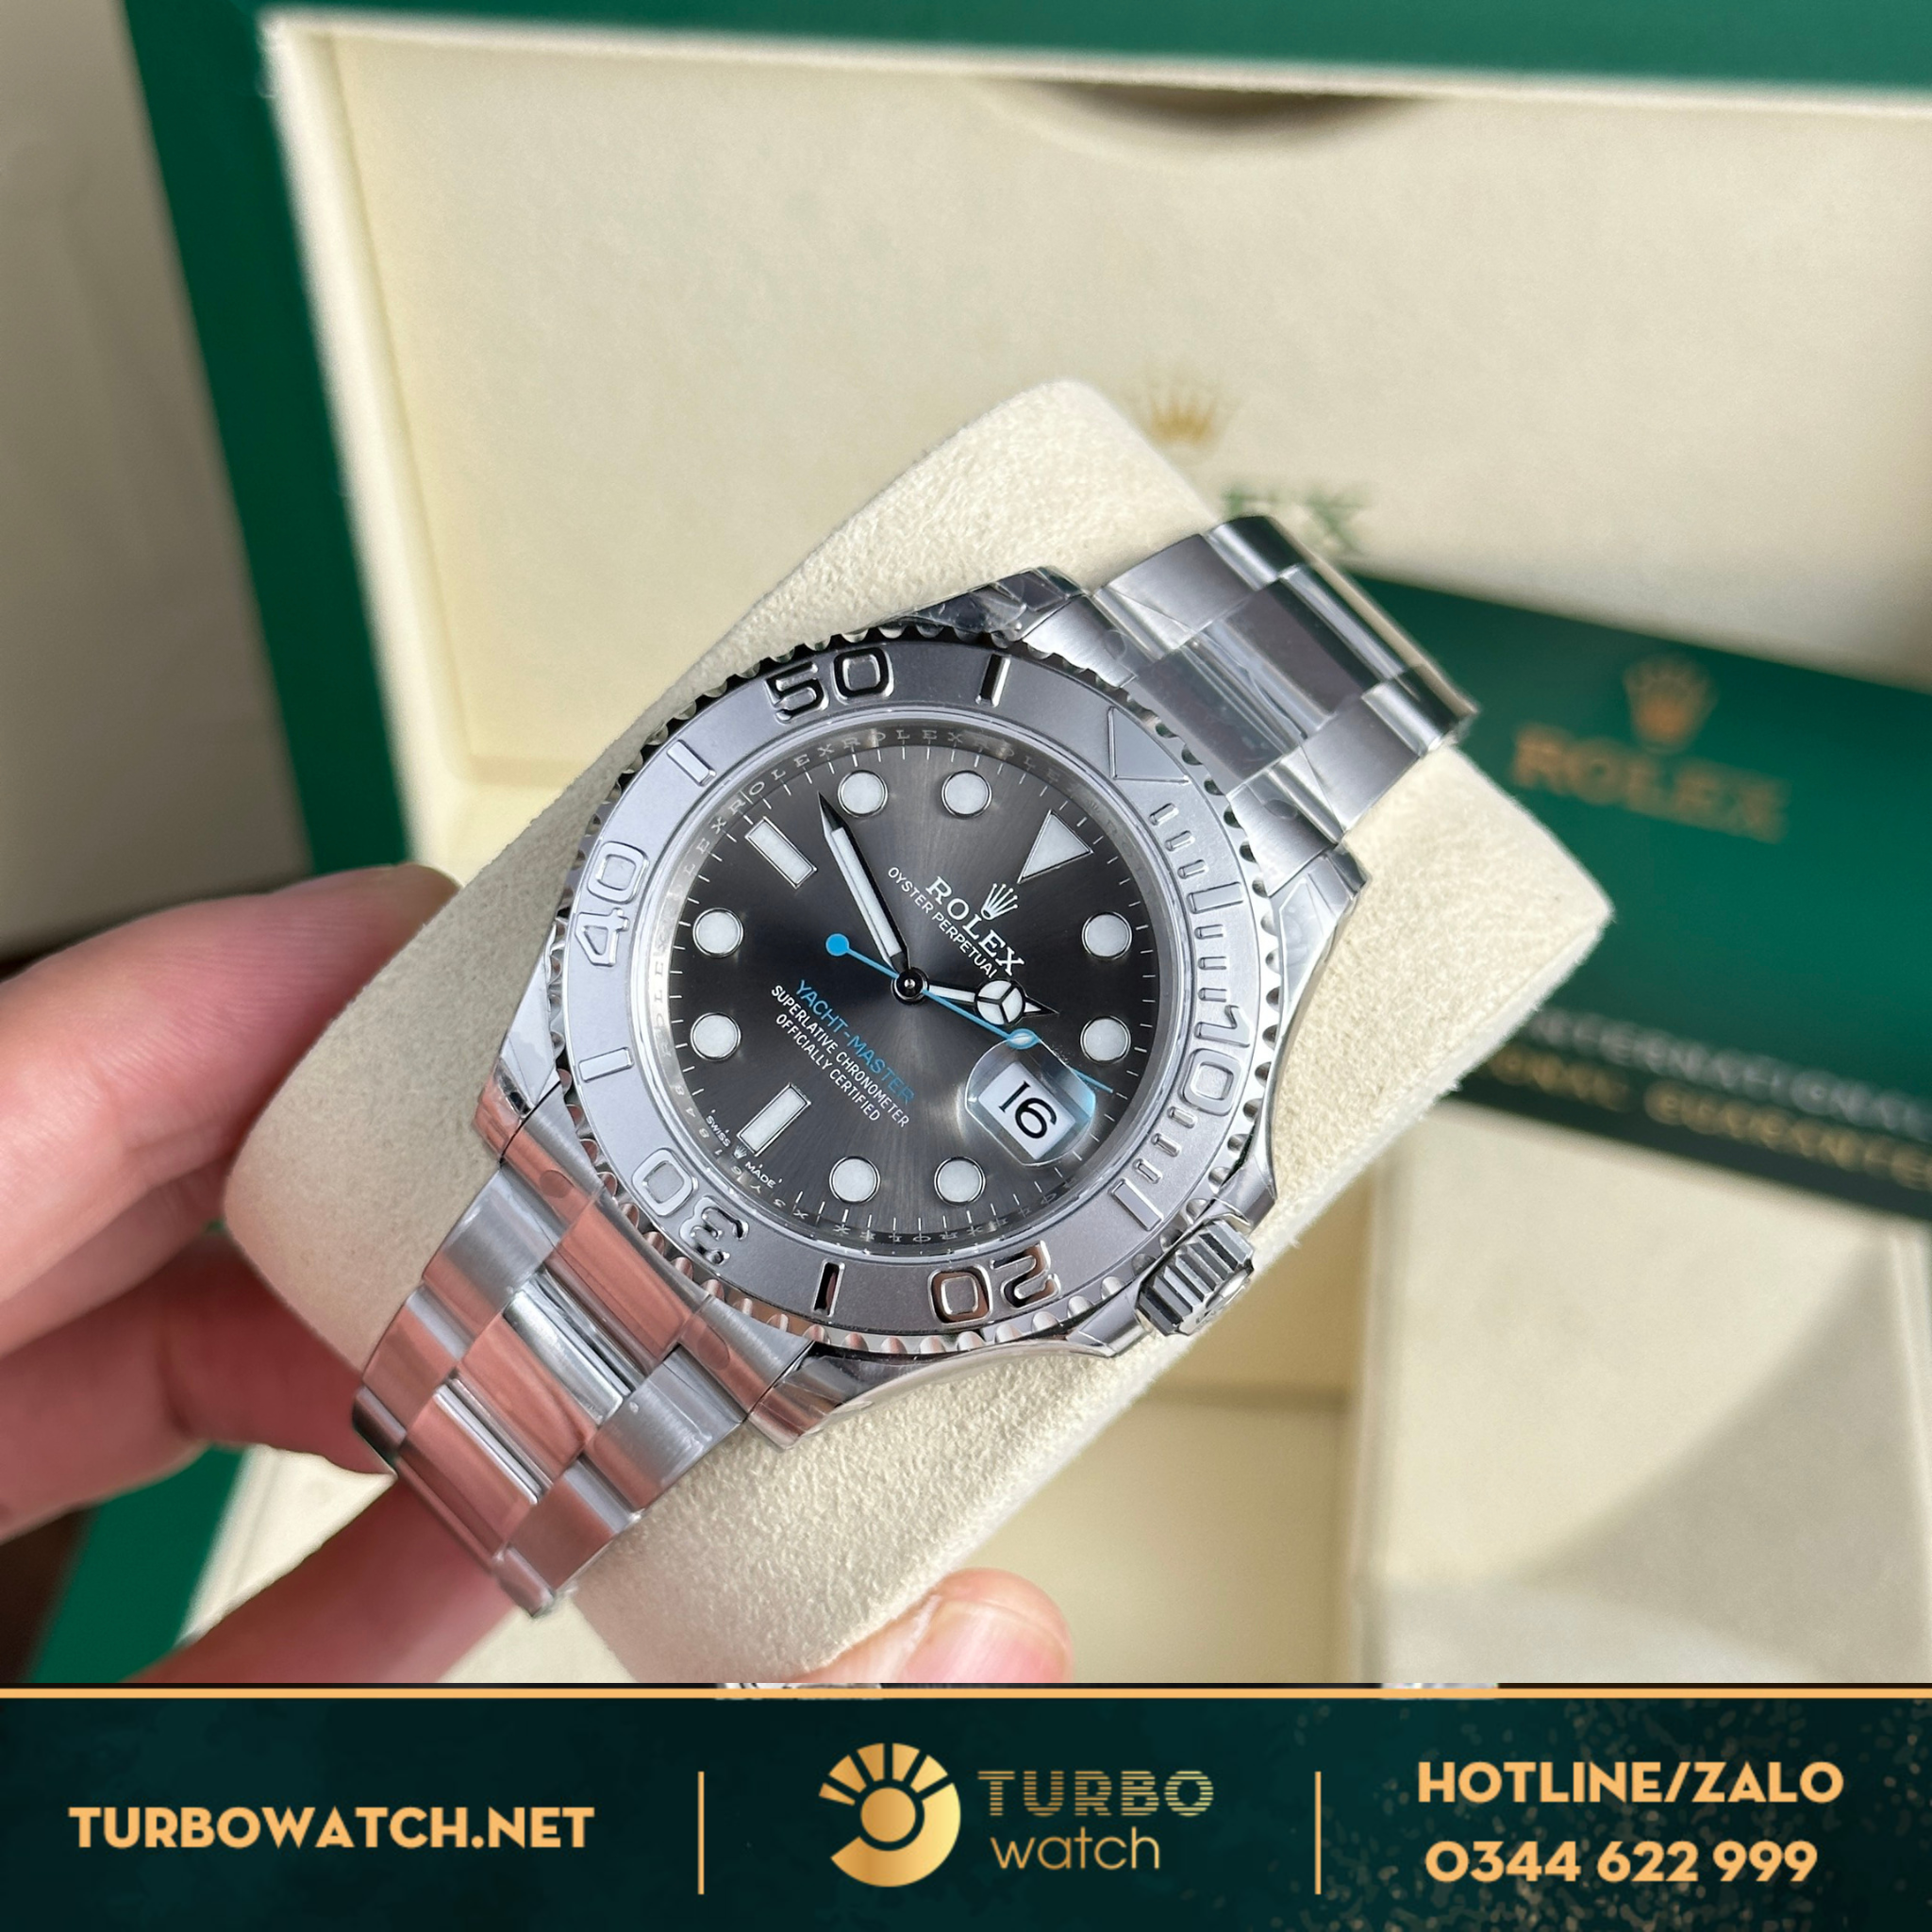 Đồng hồ Rolex Yacht-Master 126622 mặt xám fake 1:1